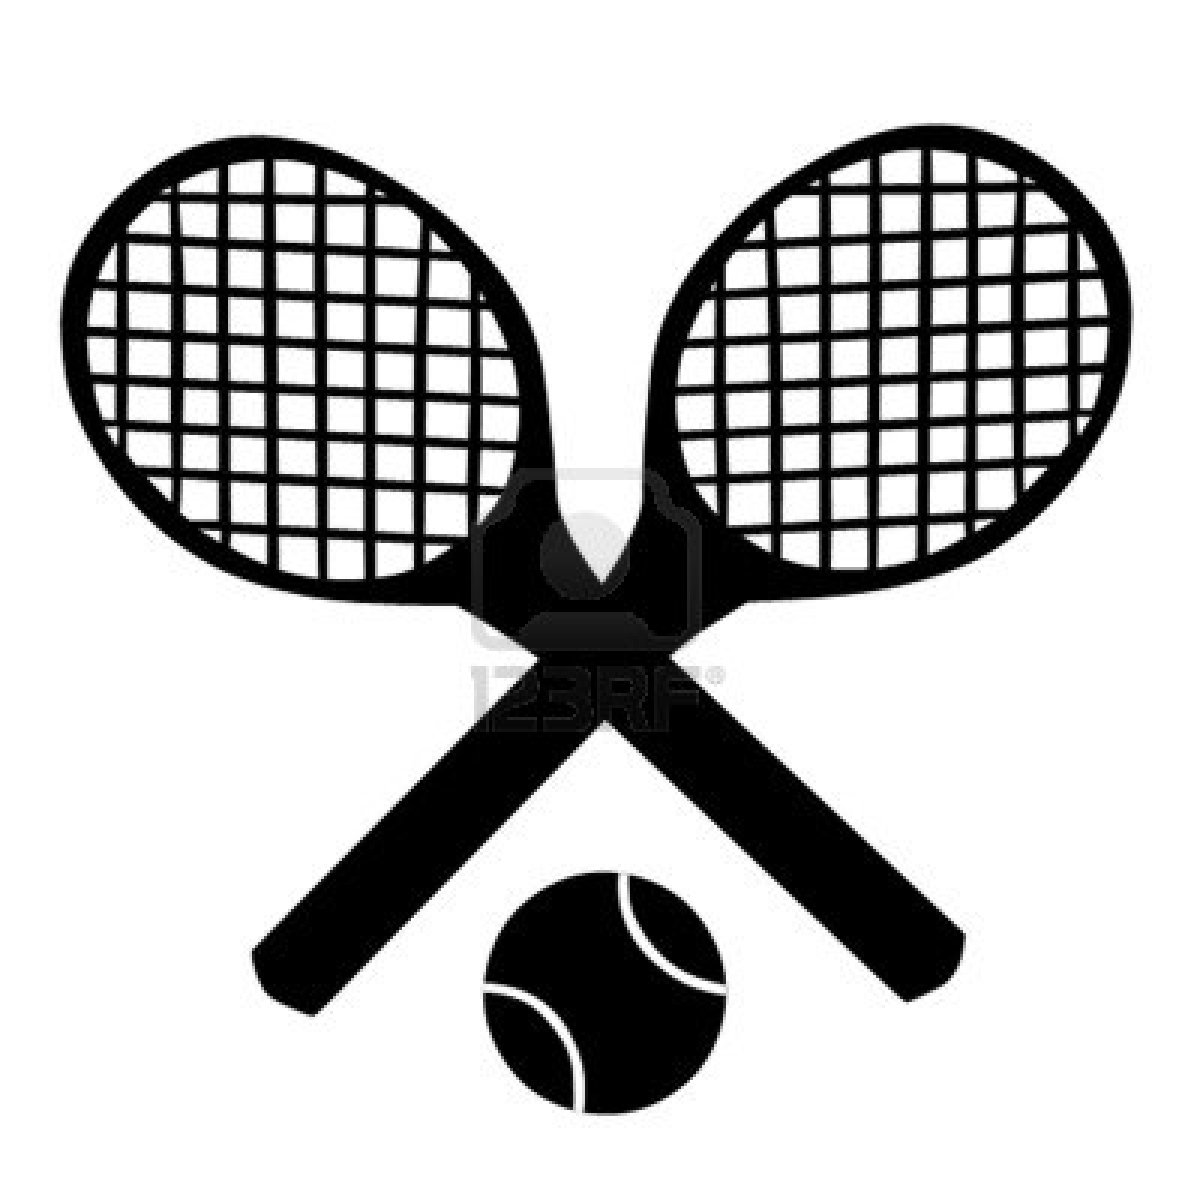 Tennis racket black and white